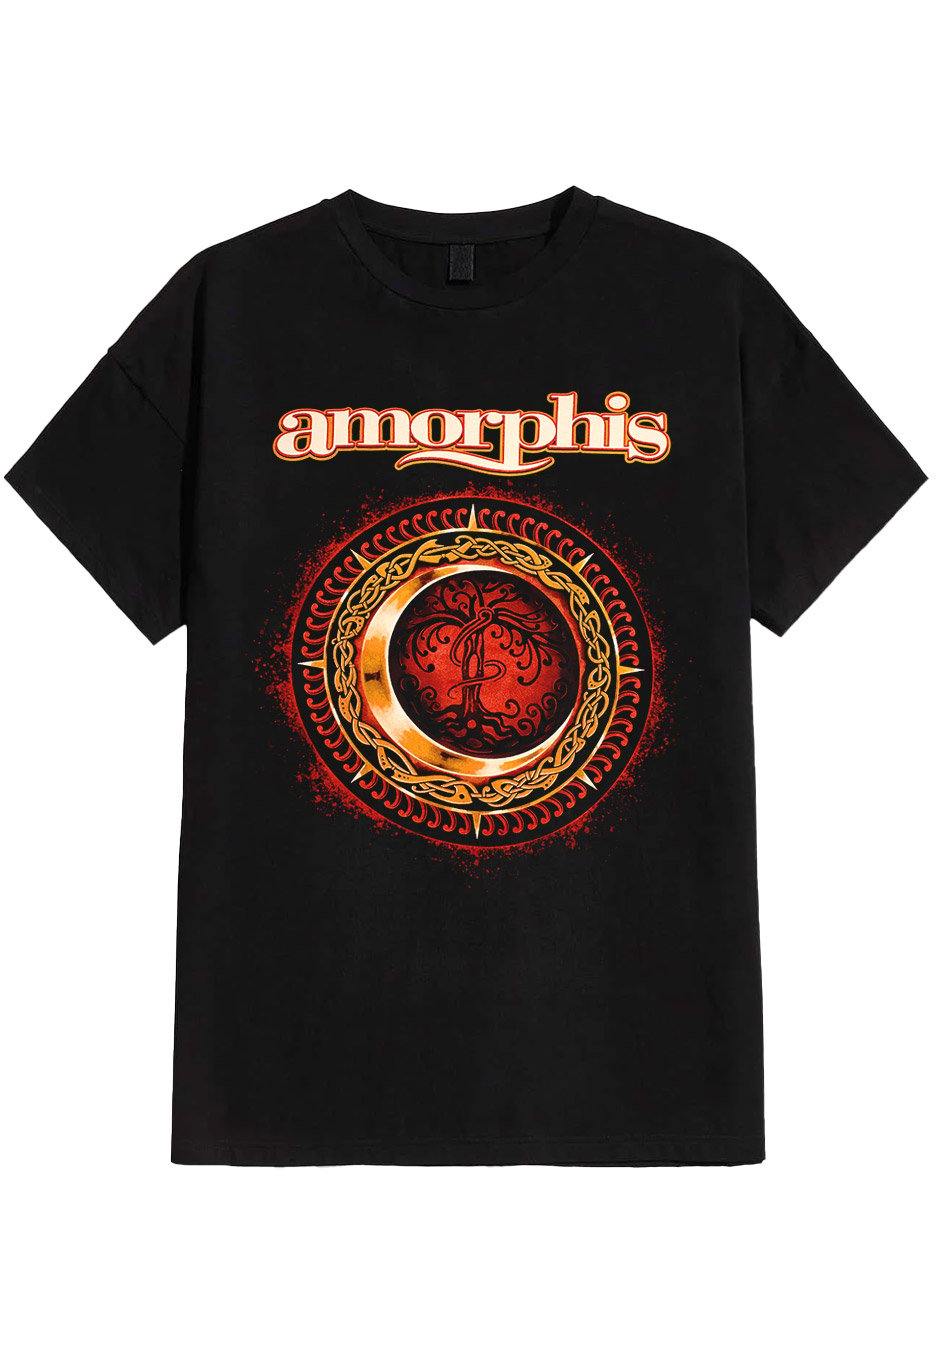 Amorphis - The Moon - T-Shirt